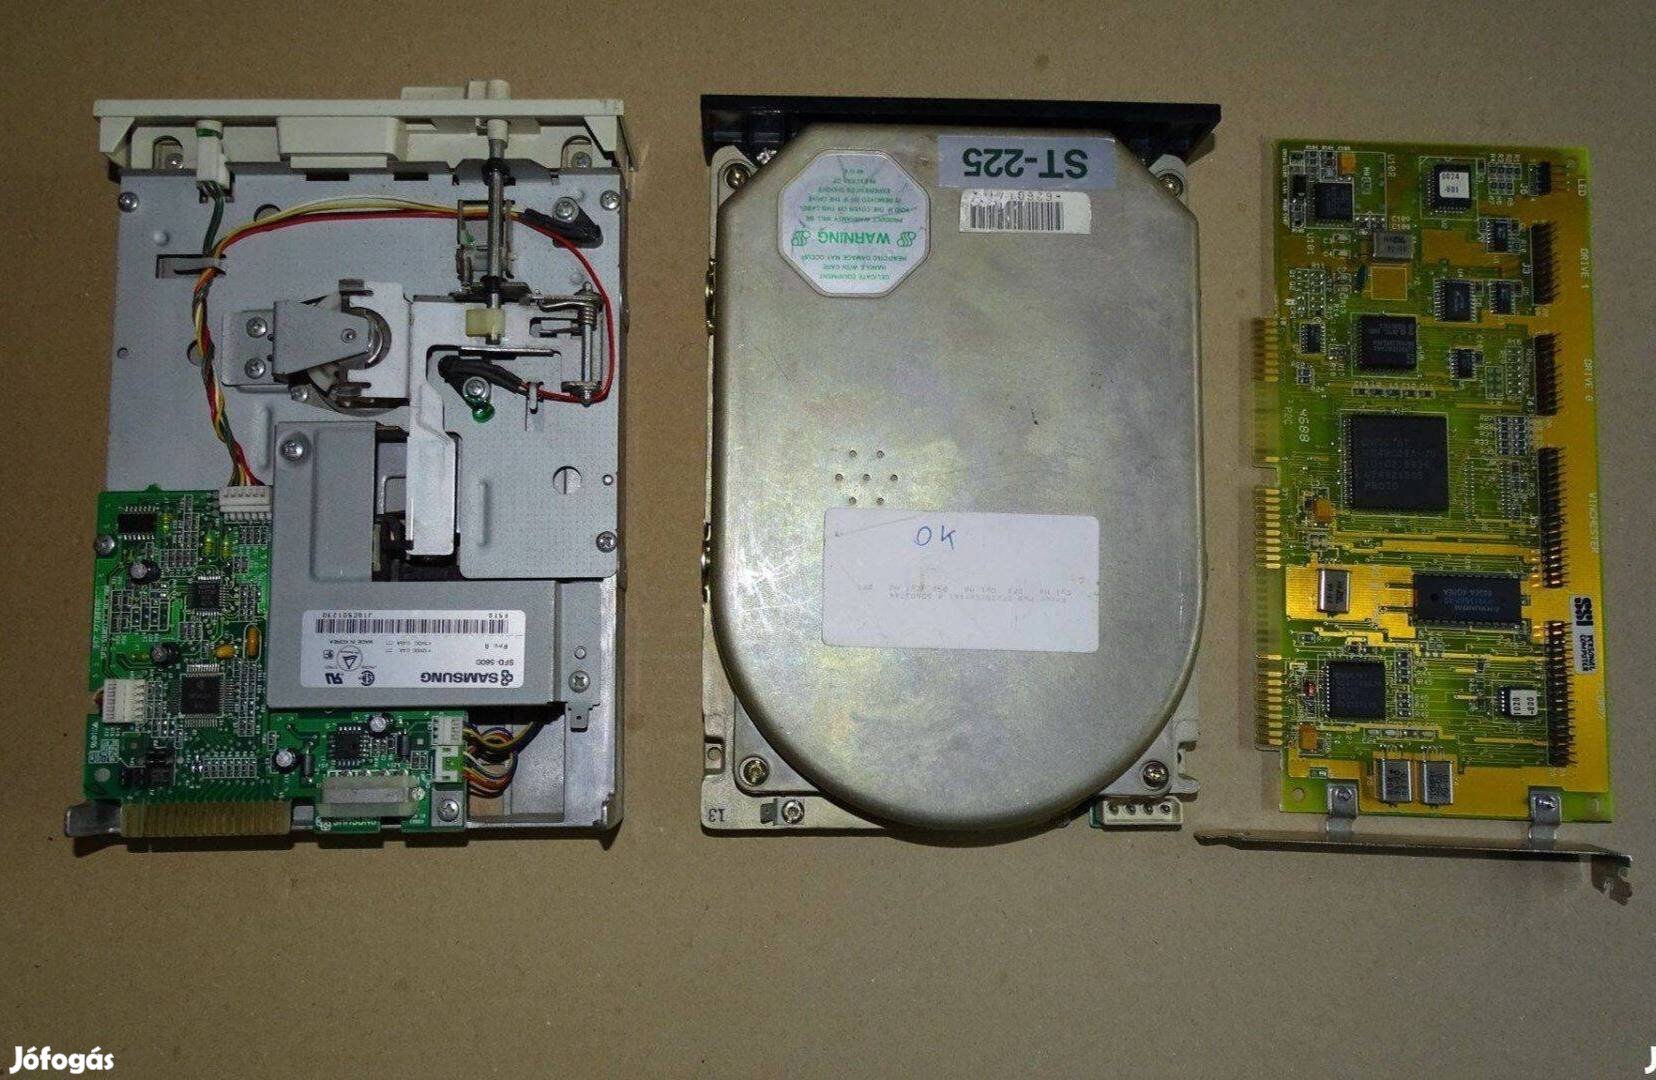 Seagate ST-225 MFM hdd és + Floppy 5.1/4" + WD I/O kártya